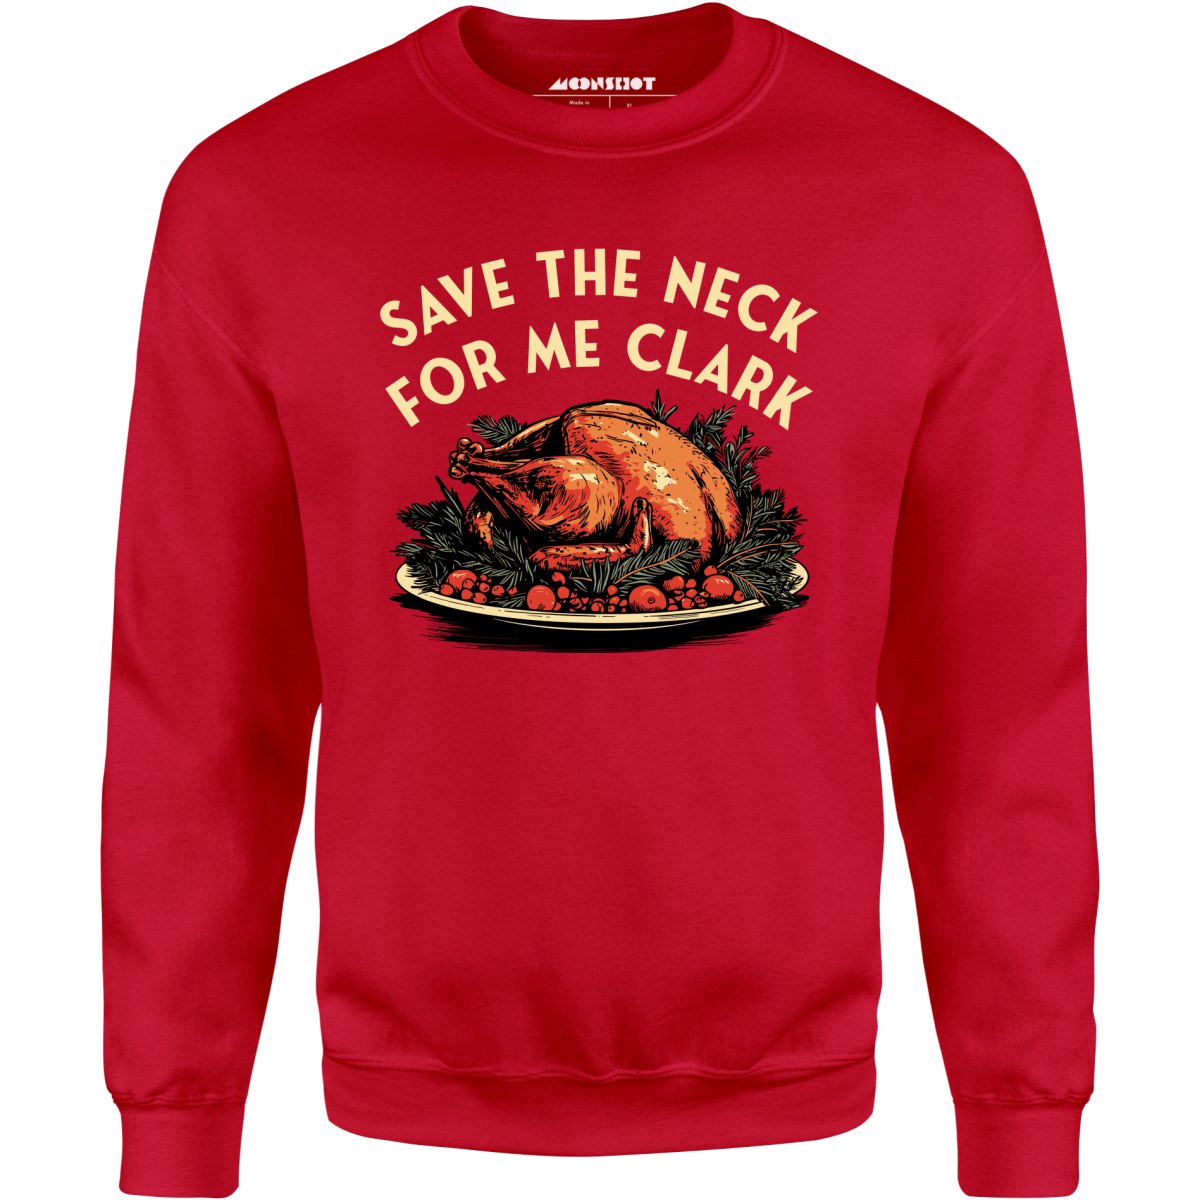 Save the Neck For Me Clark - Unisex Sweatshirt